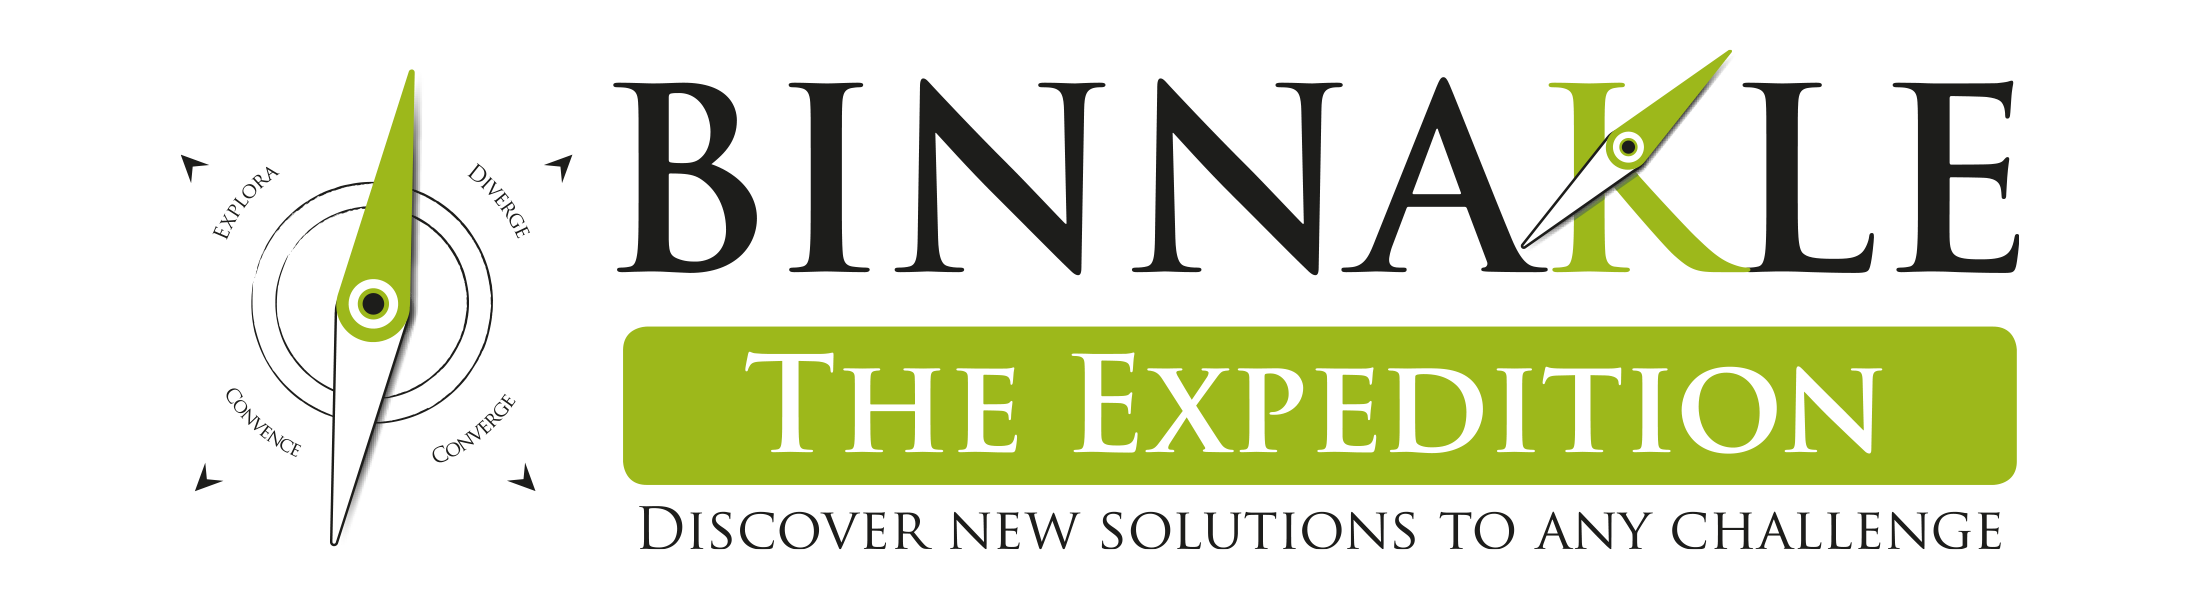 binnakle-the-expedition-logo